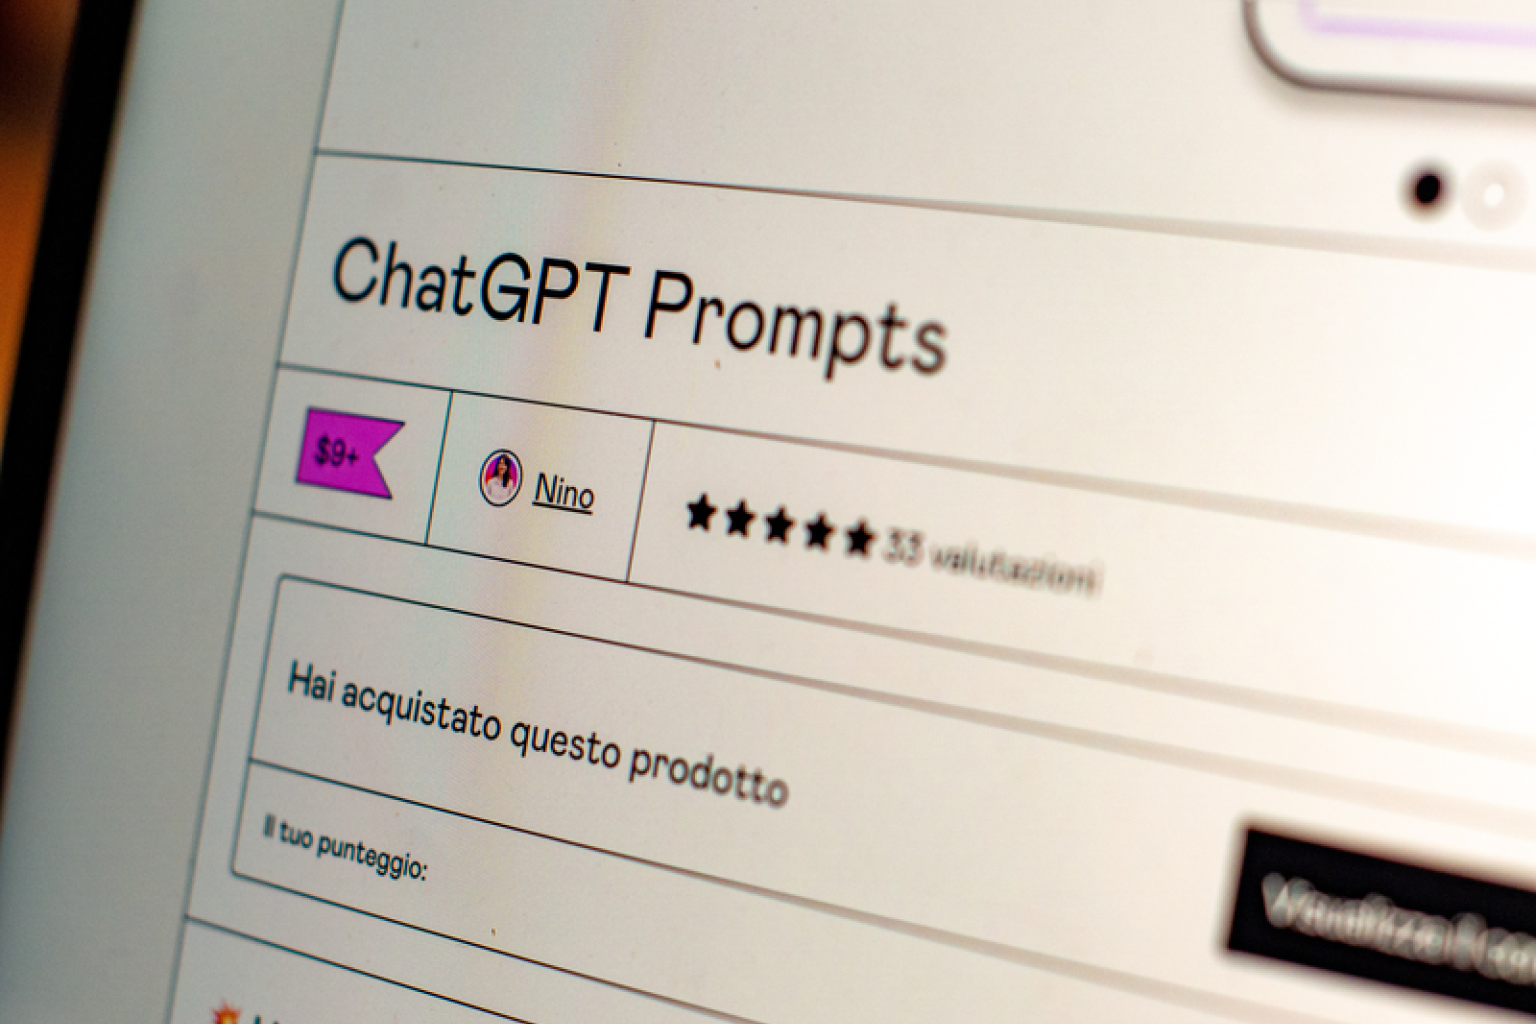 ChatGPT의 응용, 한계, 논문 및 추가 읽기 자료와 같은 주제를 다루면서 ChatGPT의 최신 프롬프트 엔지니어링 기술에 대해 더 깊이 파고들 것입니다.